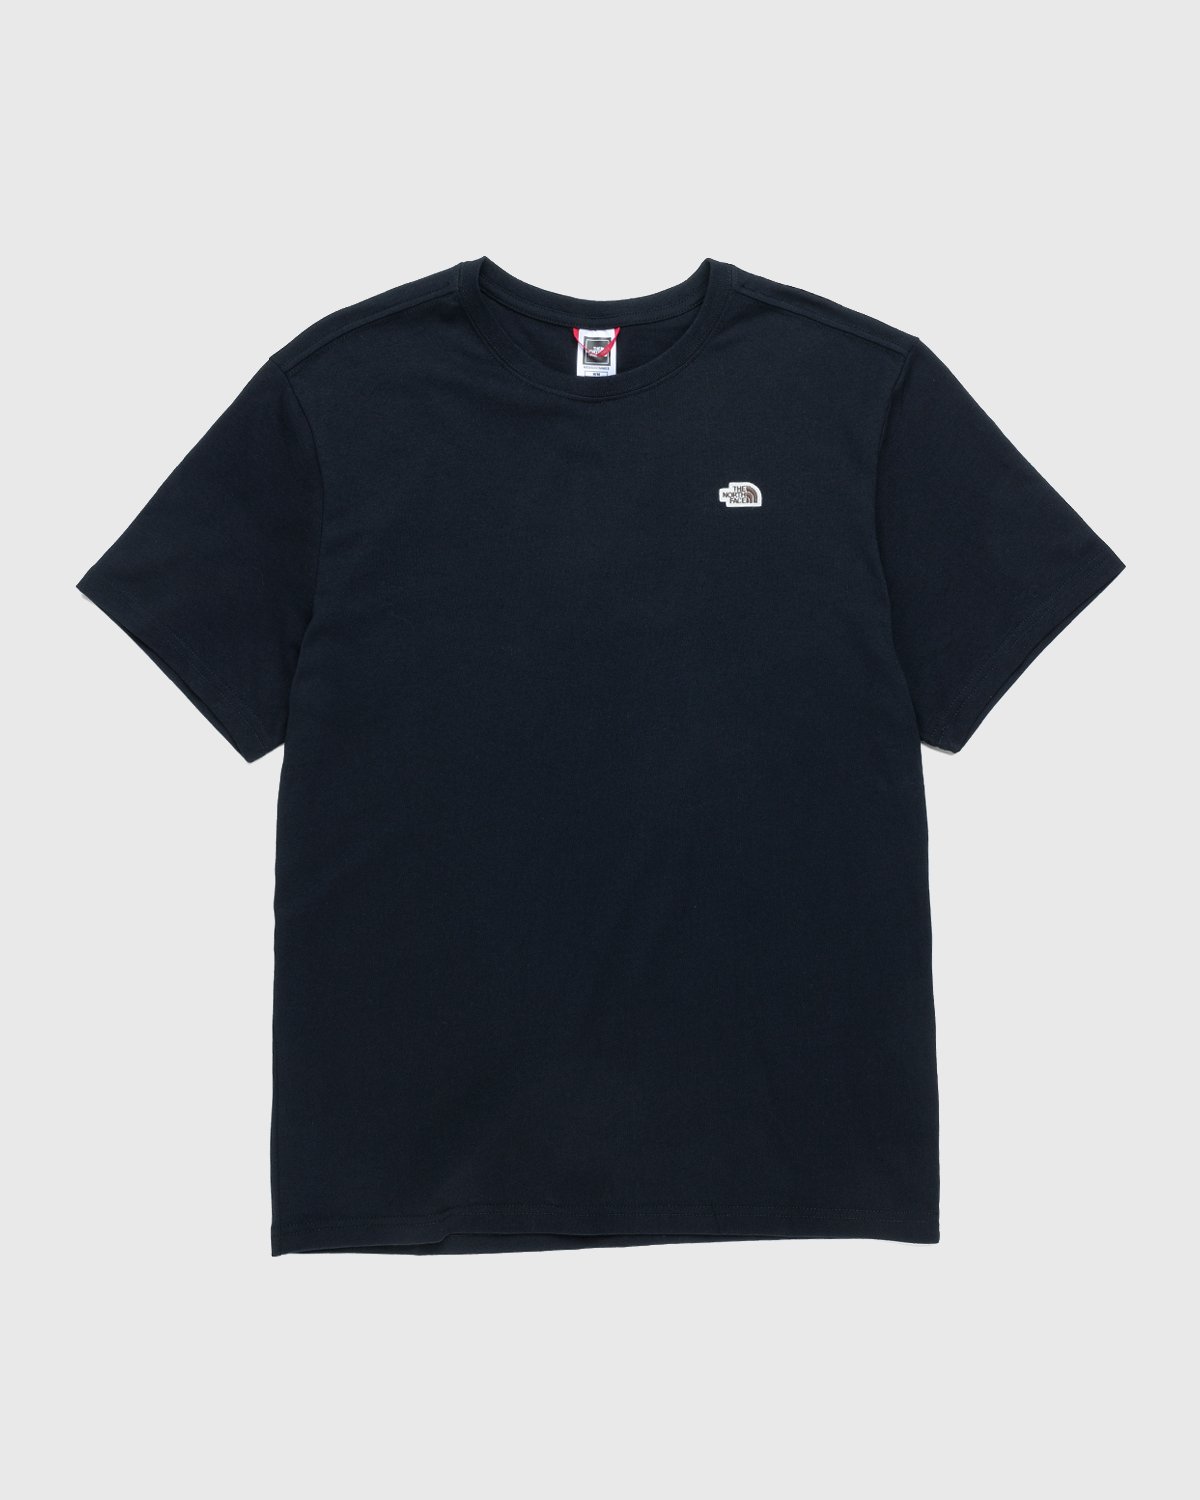 The North Face - Scrap T-Shirt Black - Clothing - Black - Image 1